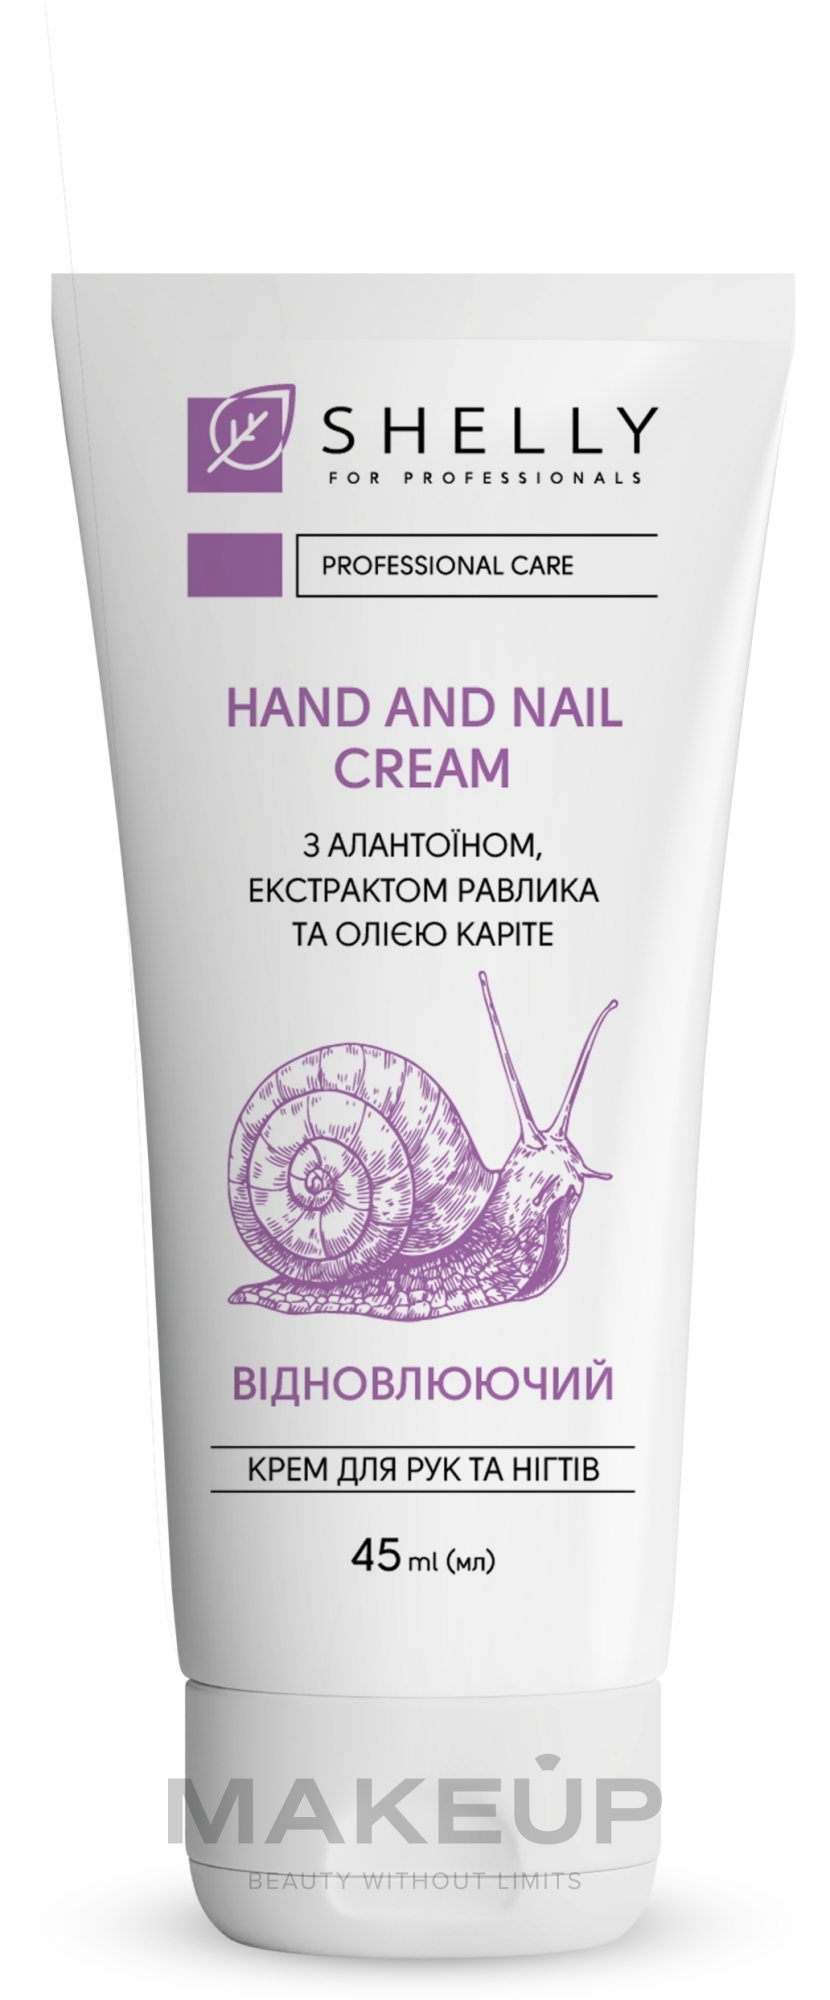 Крем для рук і нігтів з алантоїном, екстрактом равлика й олією каріте - Shelly Professional Care Hand and Nail Cream (міні) — фото 45ml